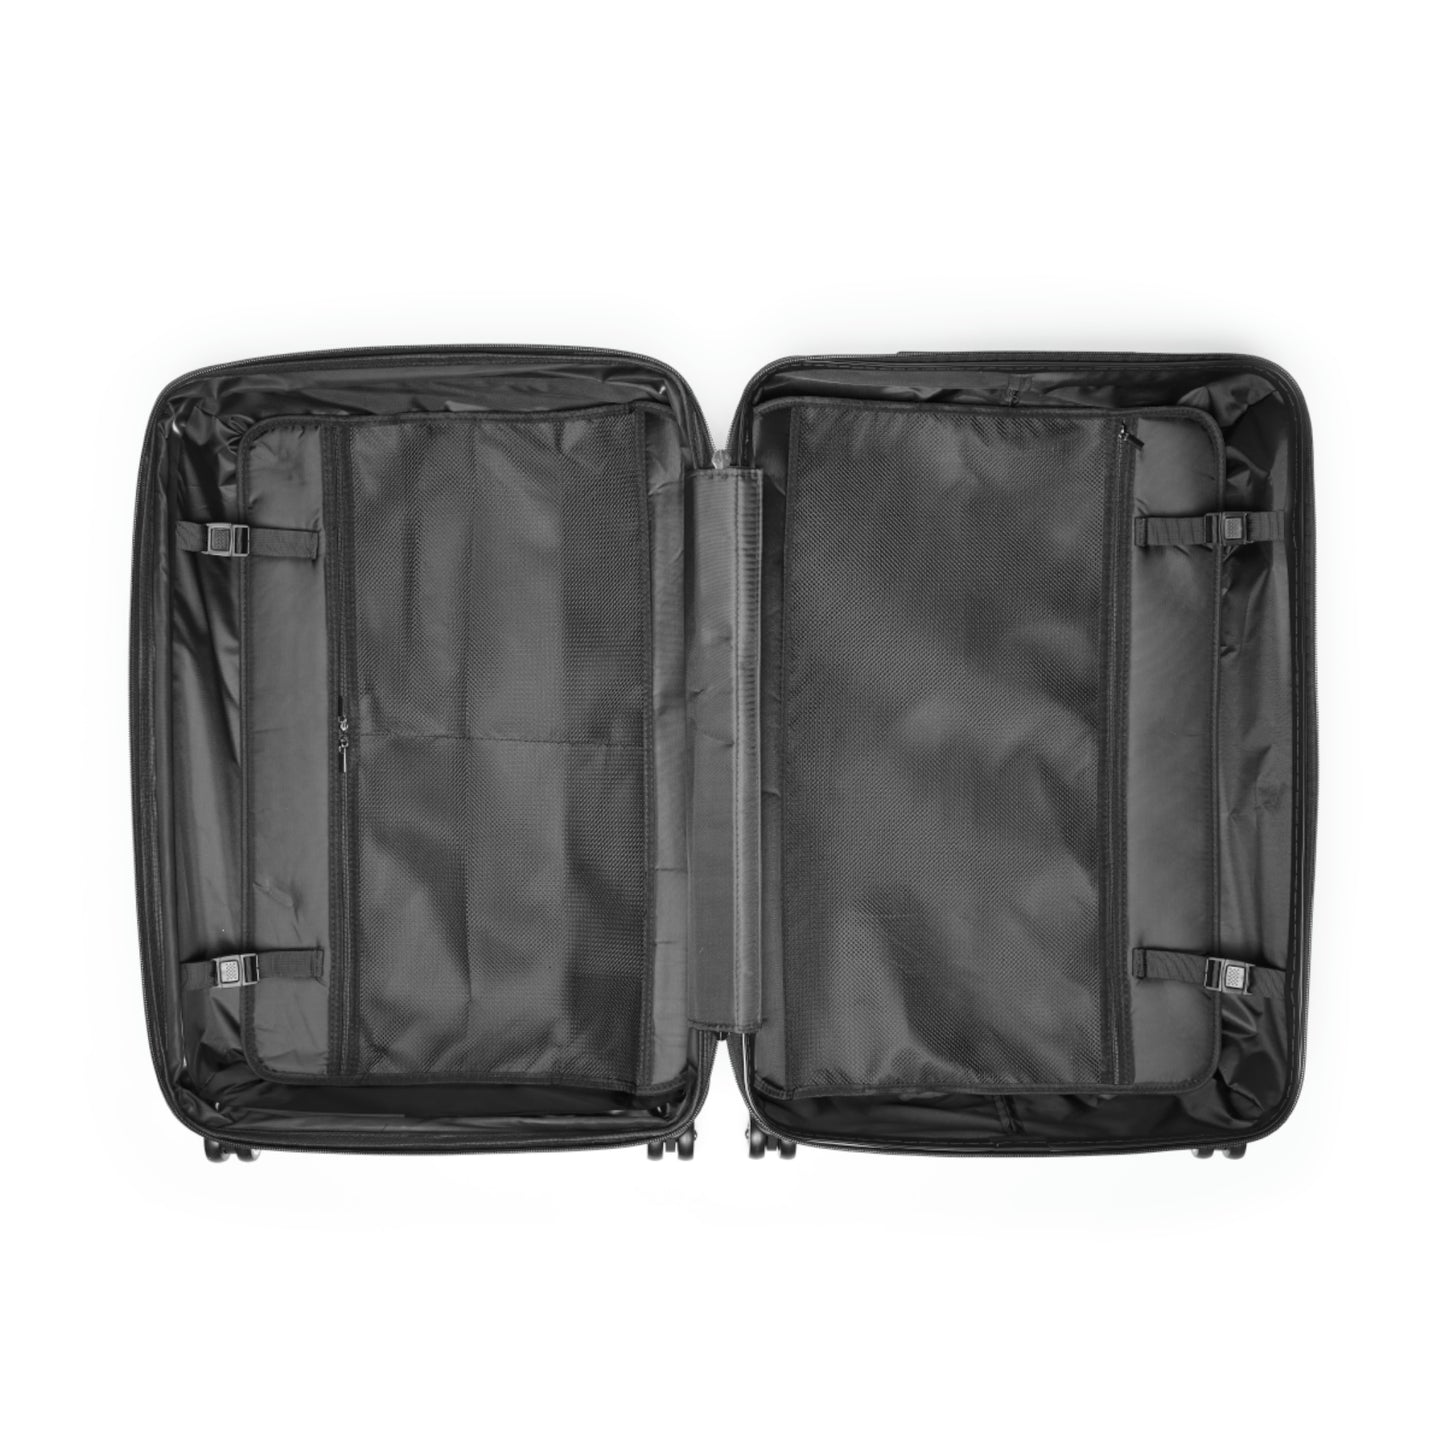 Wildflower Print Luggage / Women's Wheeled Hard Shell Suitcase